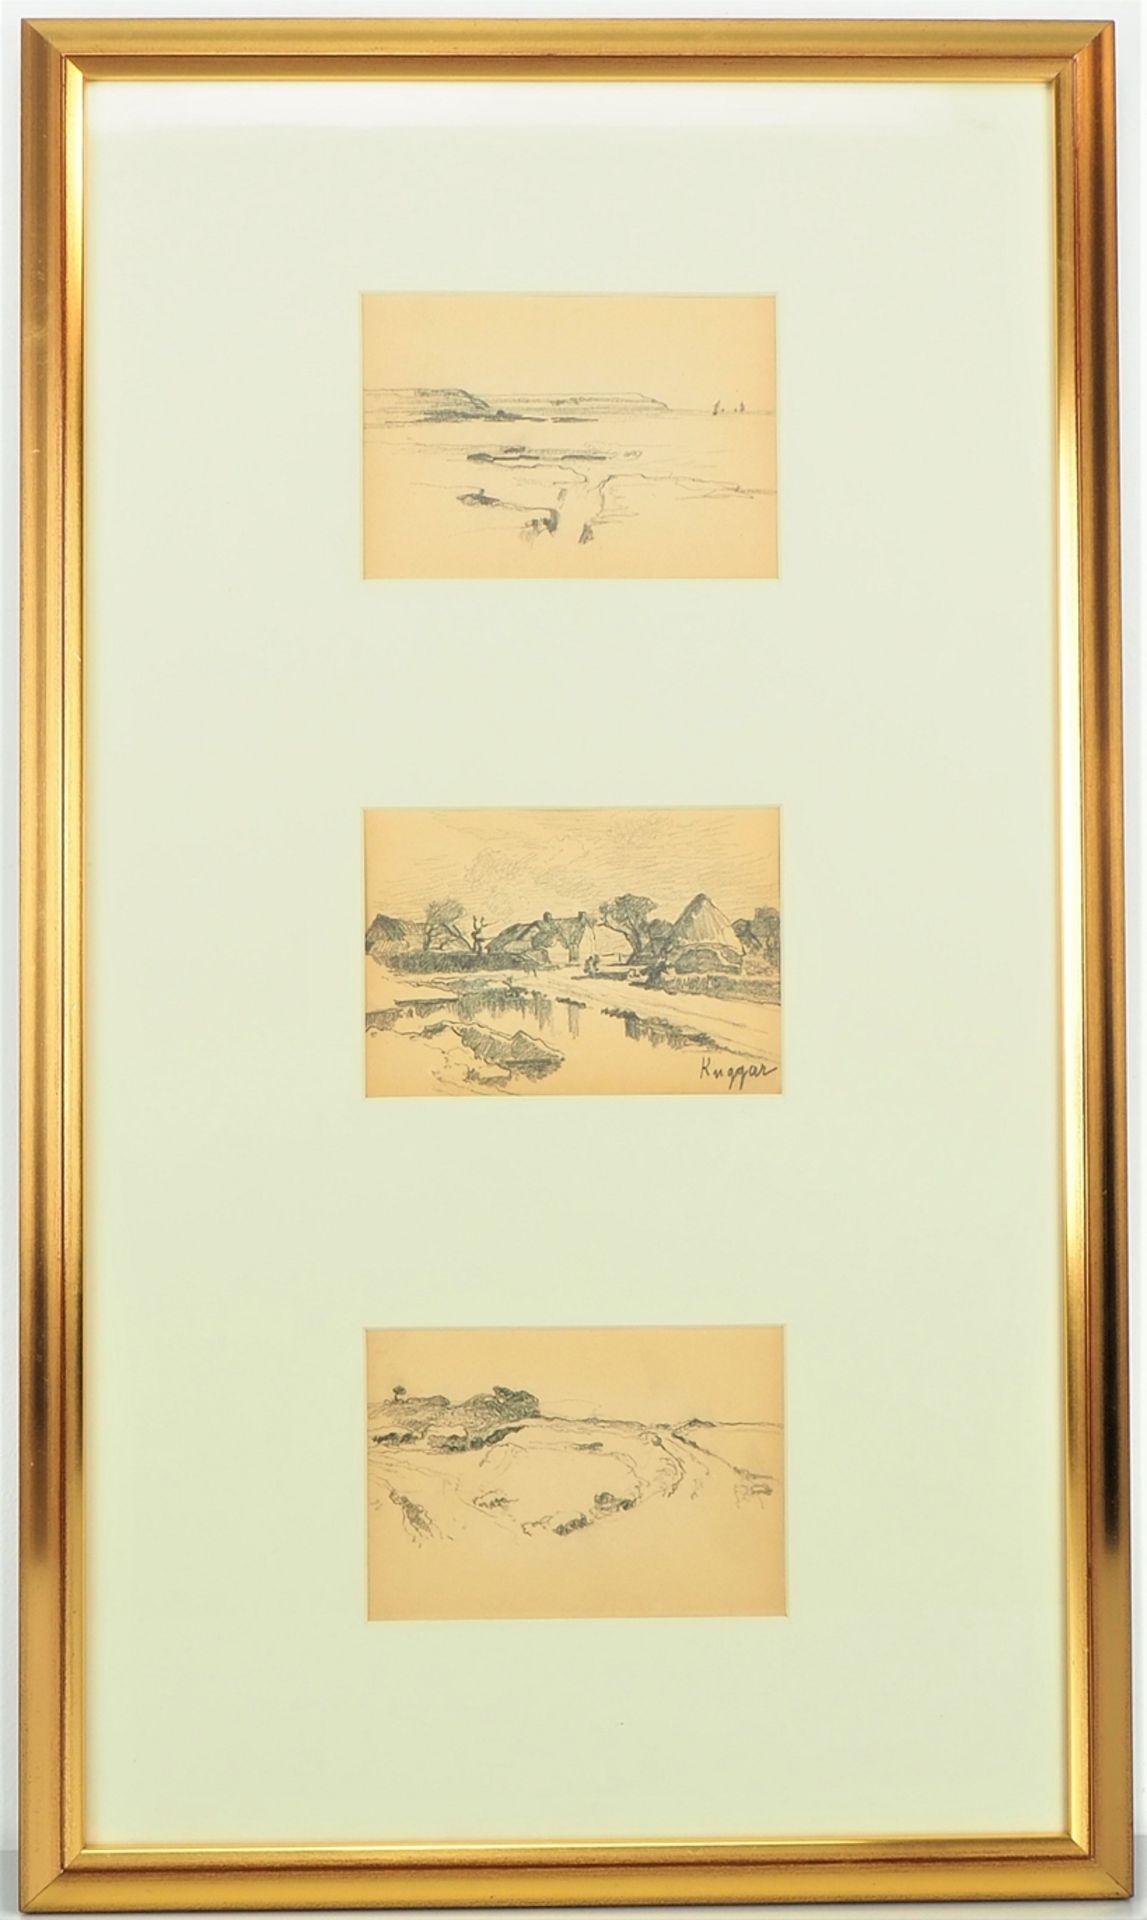 Joseph Scharpf (Biberach 1847 - um 1930) - "Drei südenglische Landschaften"